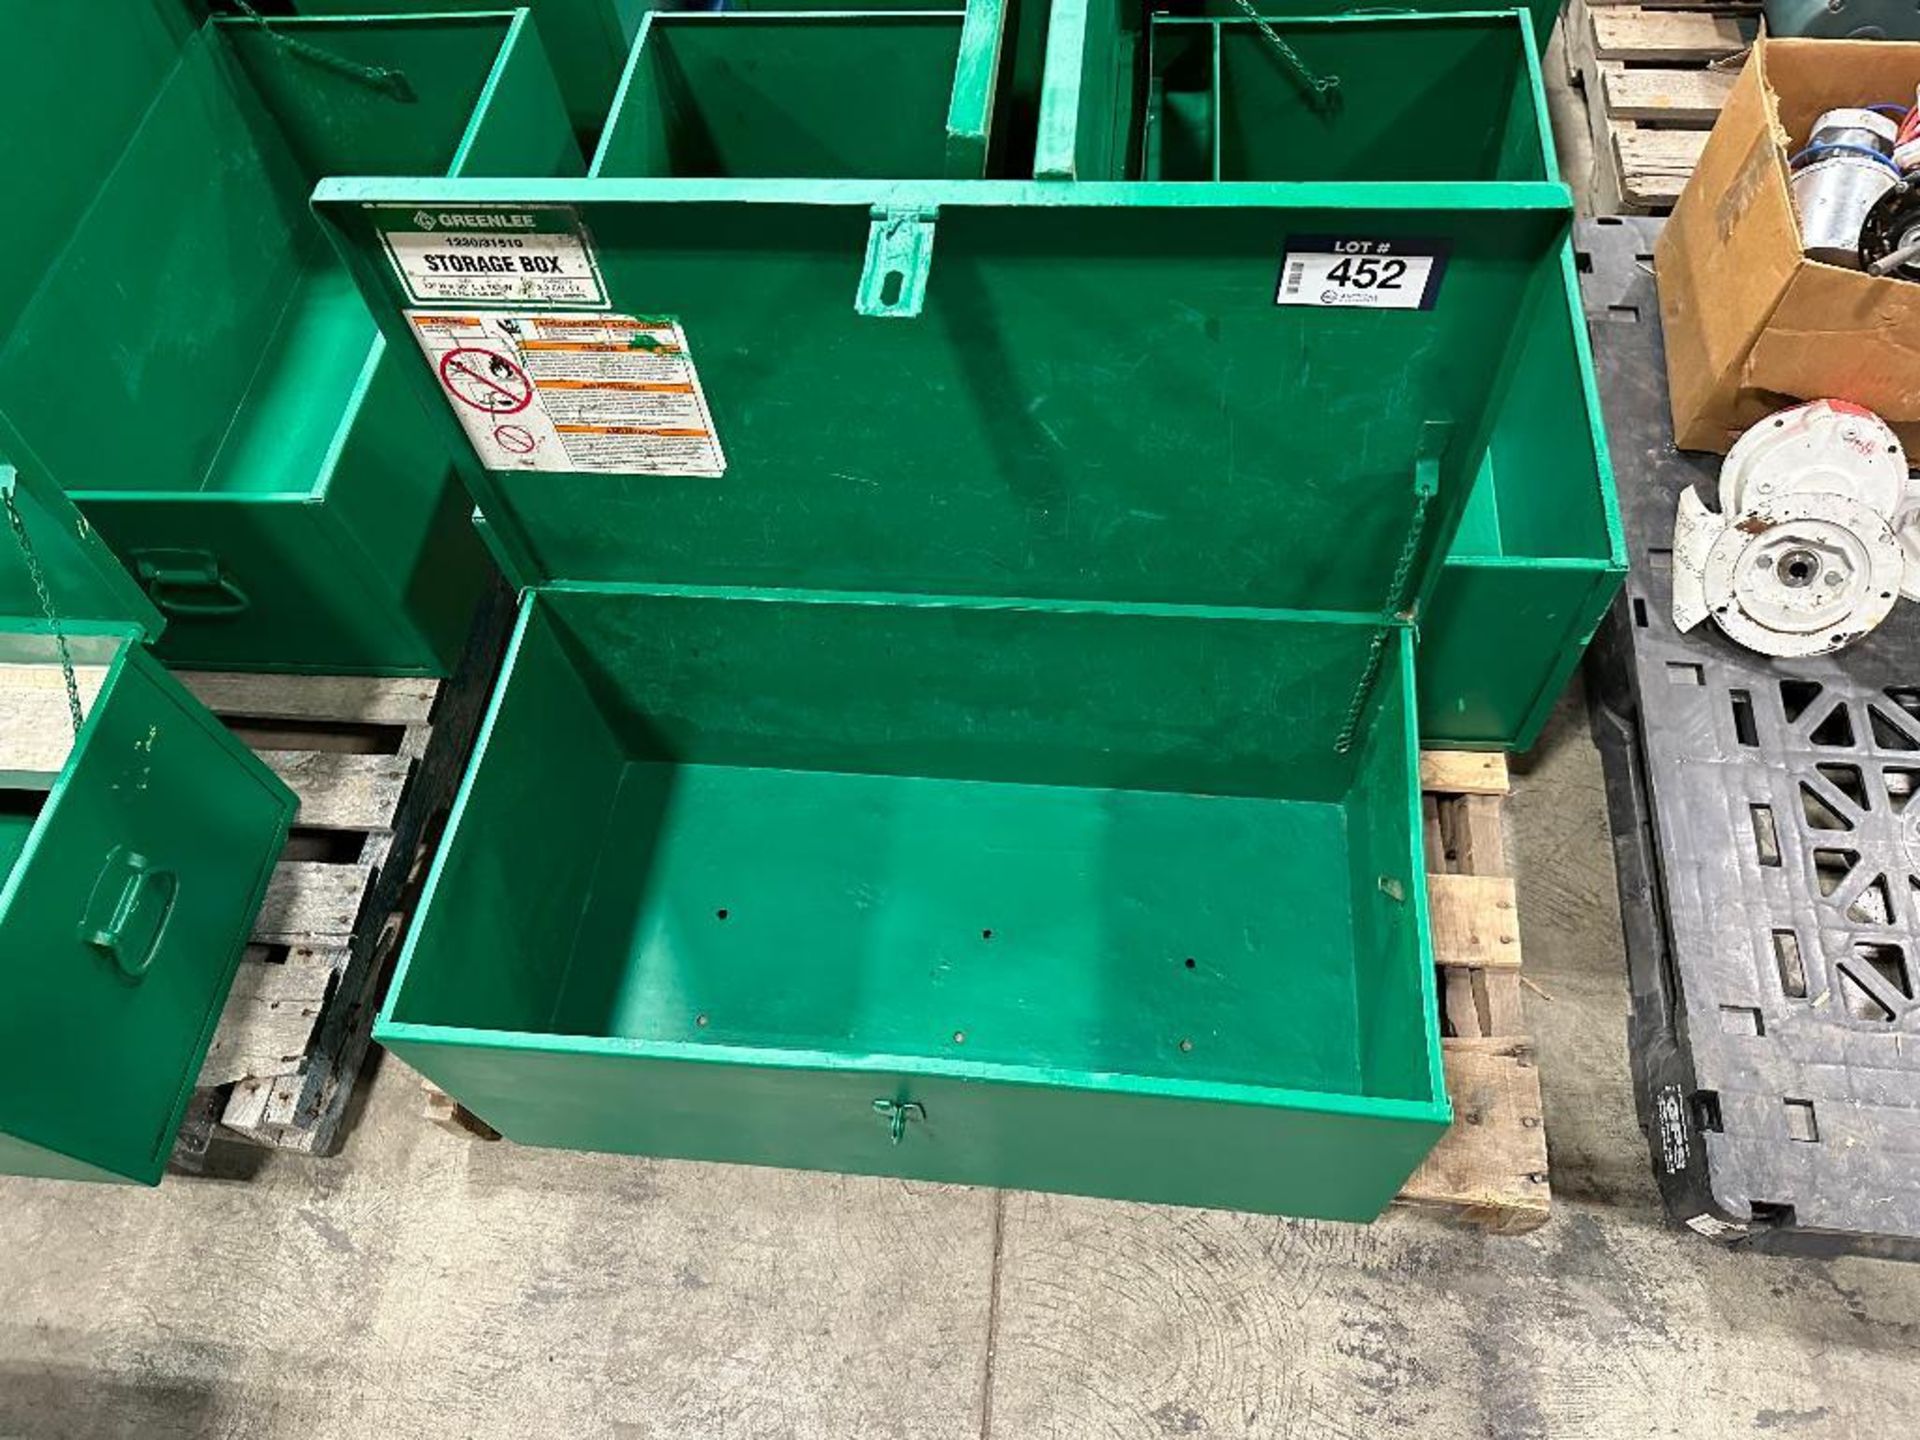 Greenlee Storage Box, 12" X 30" X 16" - Image 2 of 3